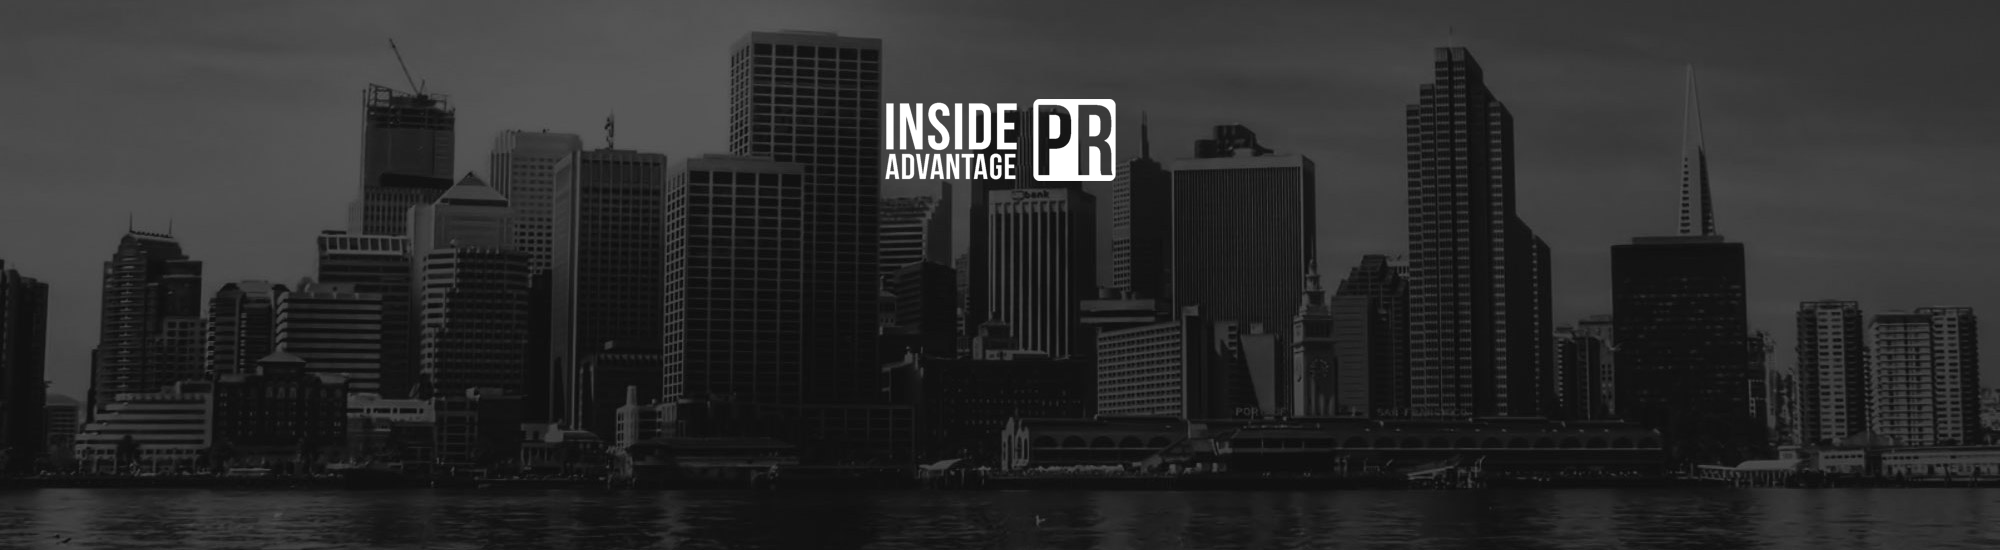 Palm Beach Hedge Fund Association partners with Inside Advantage PR